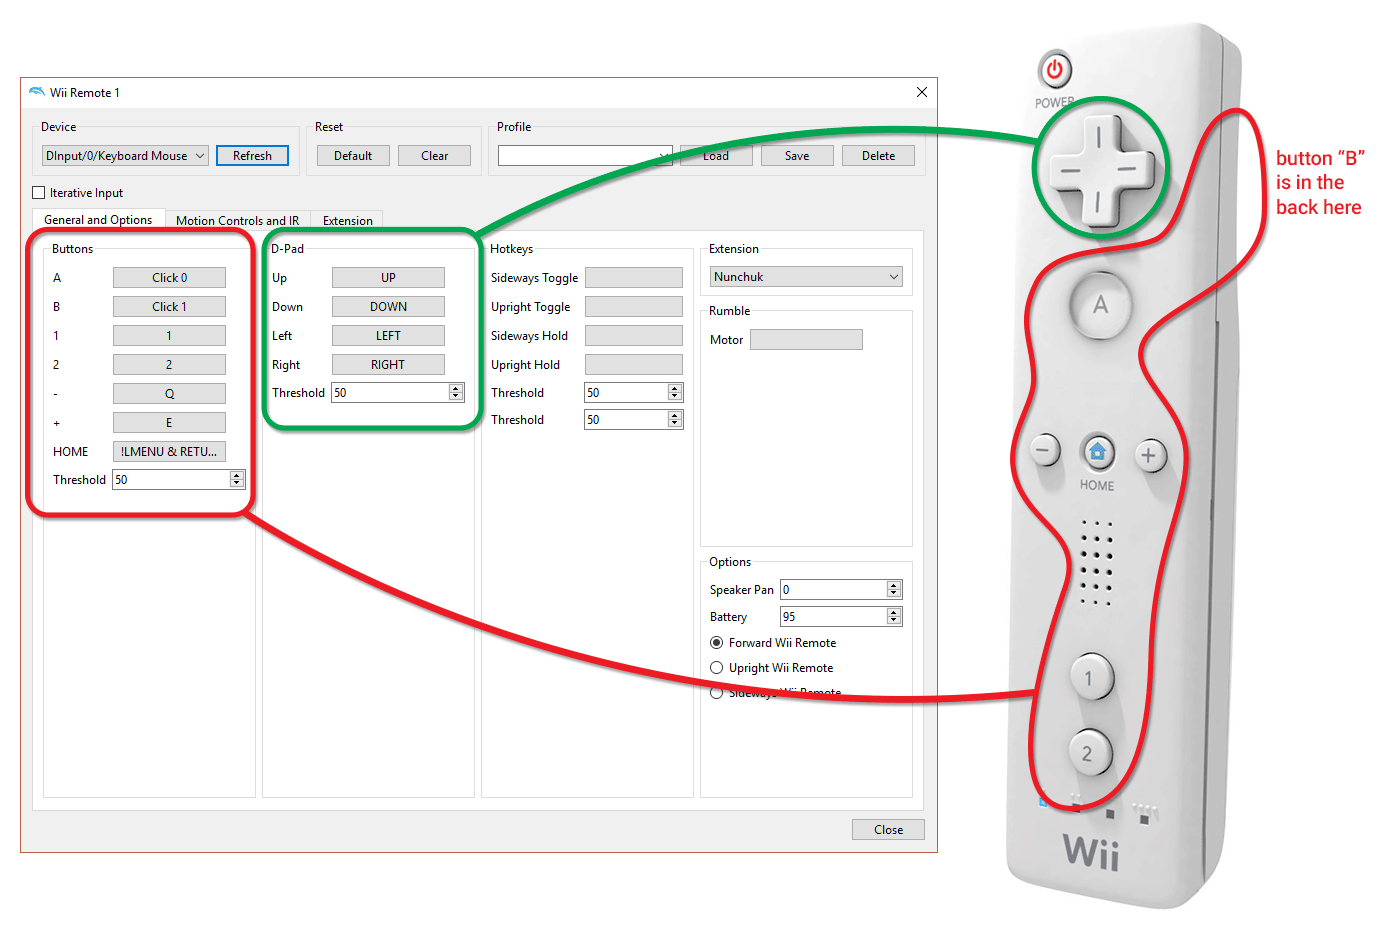 dolphin emulator mac controller setup